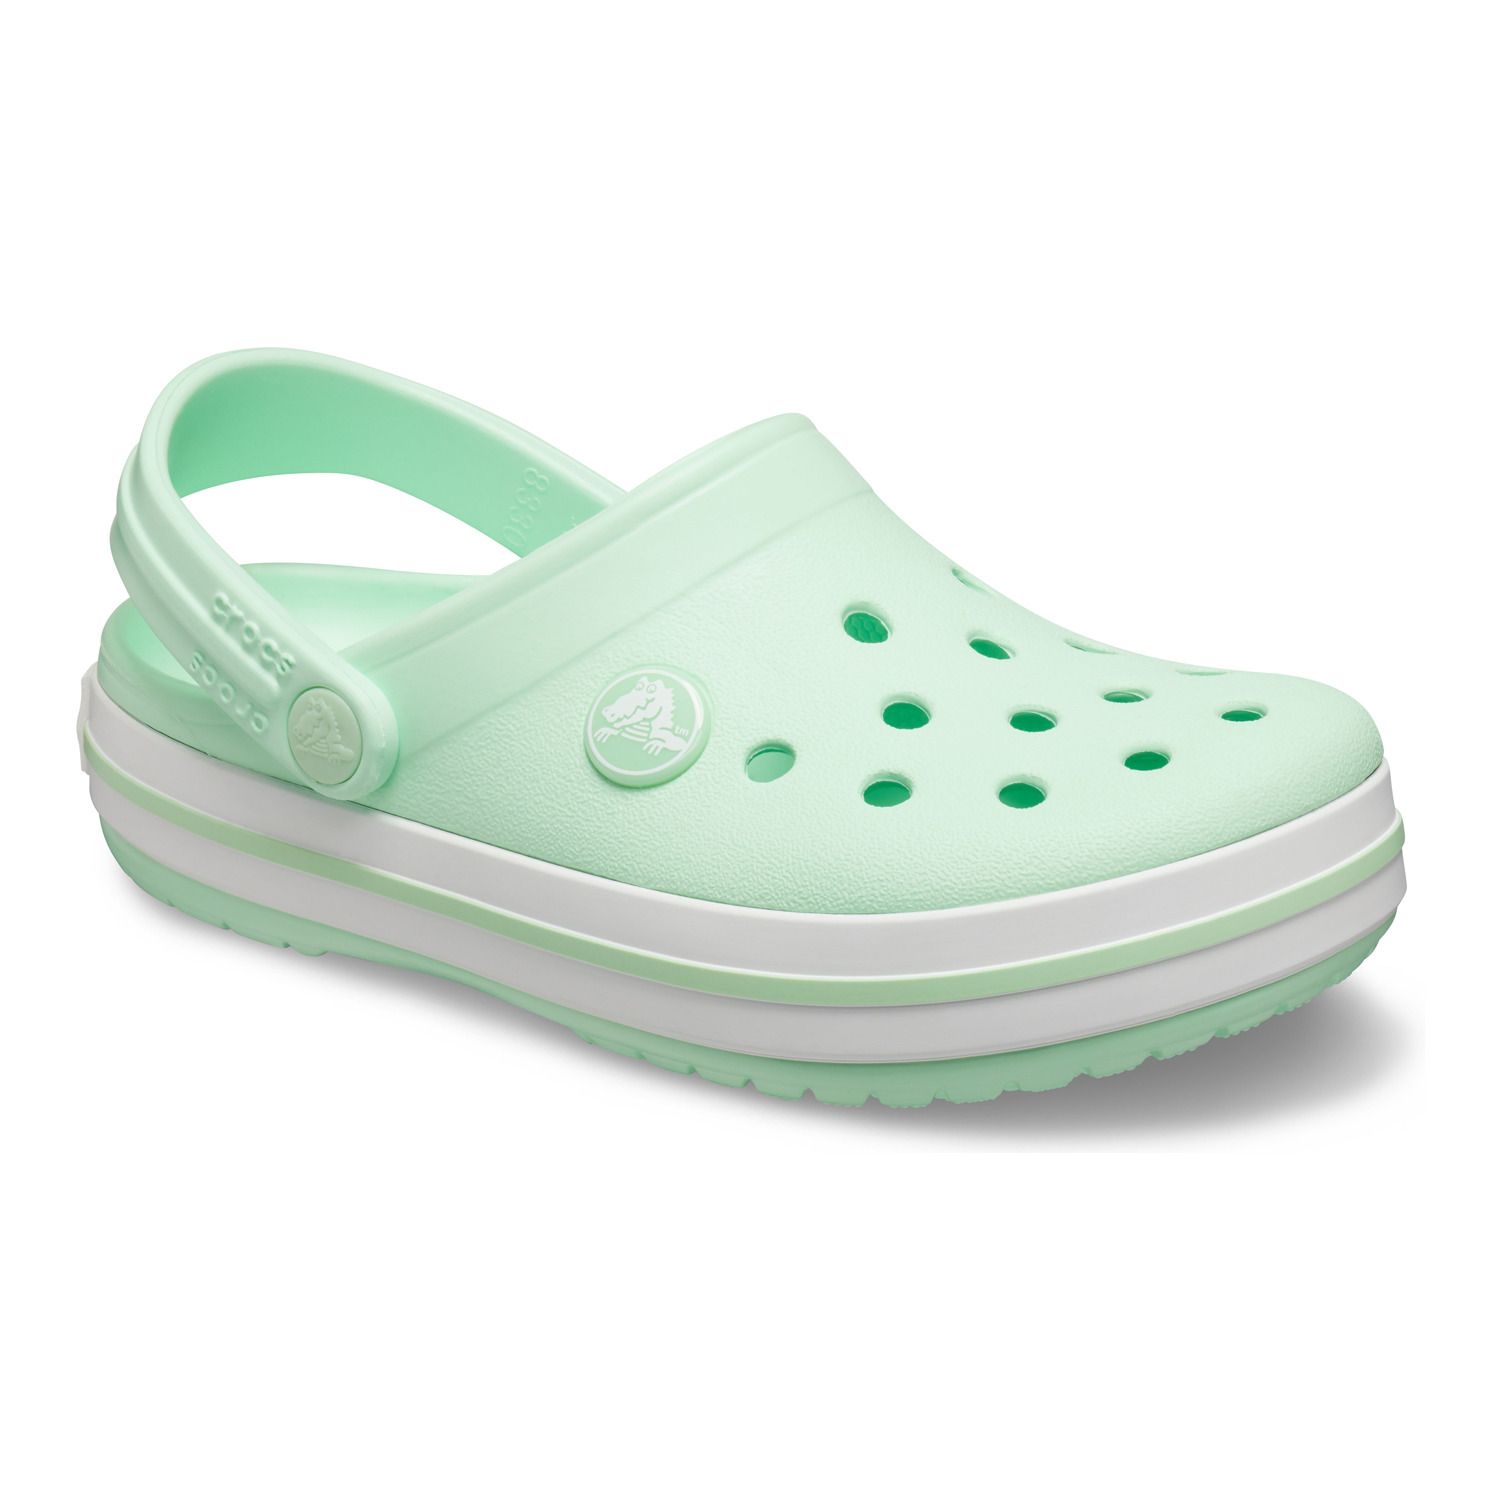 toddler size 11 crocs